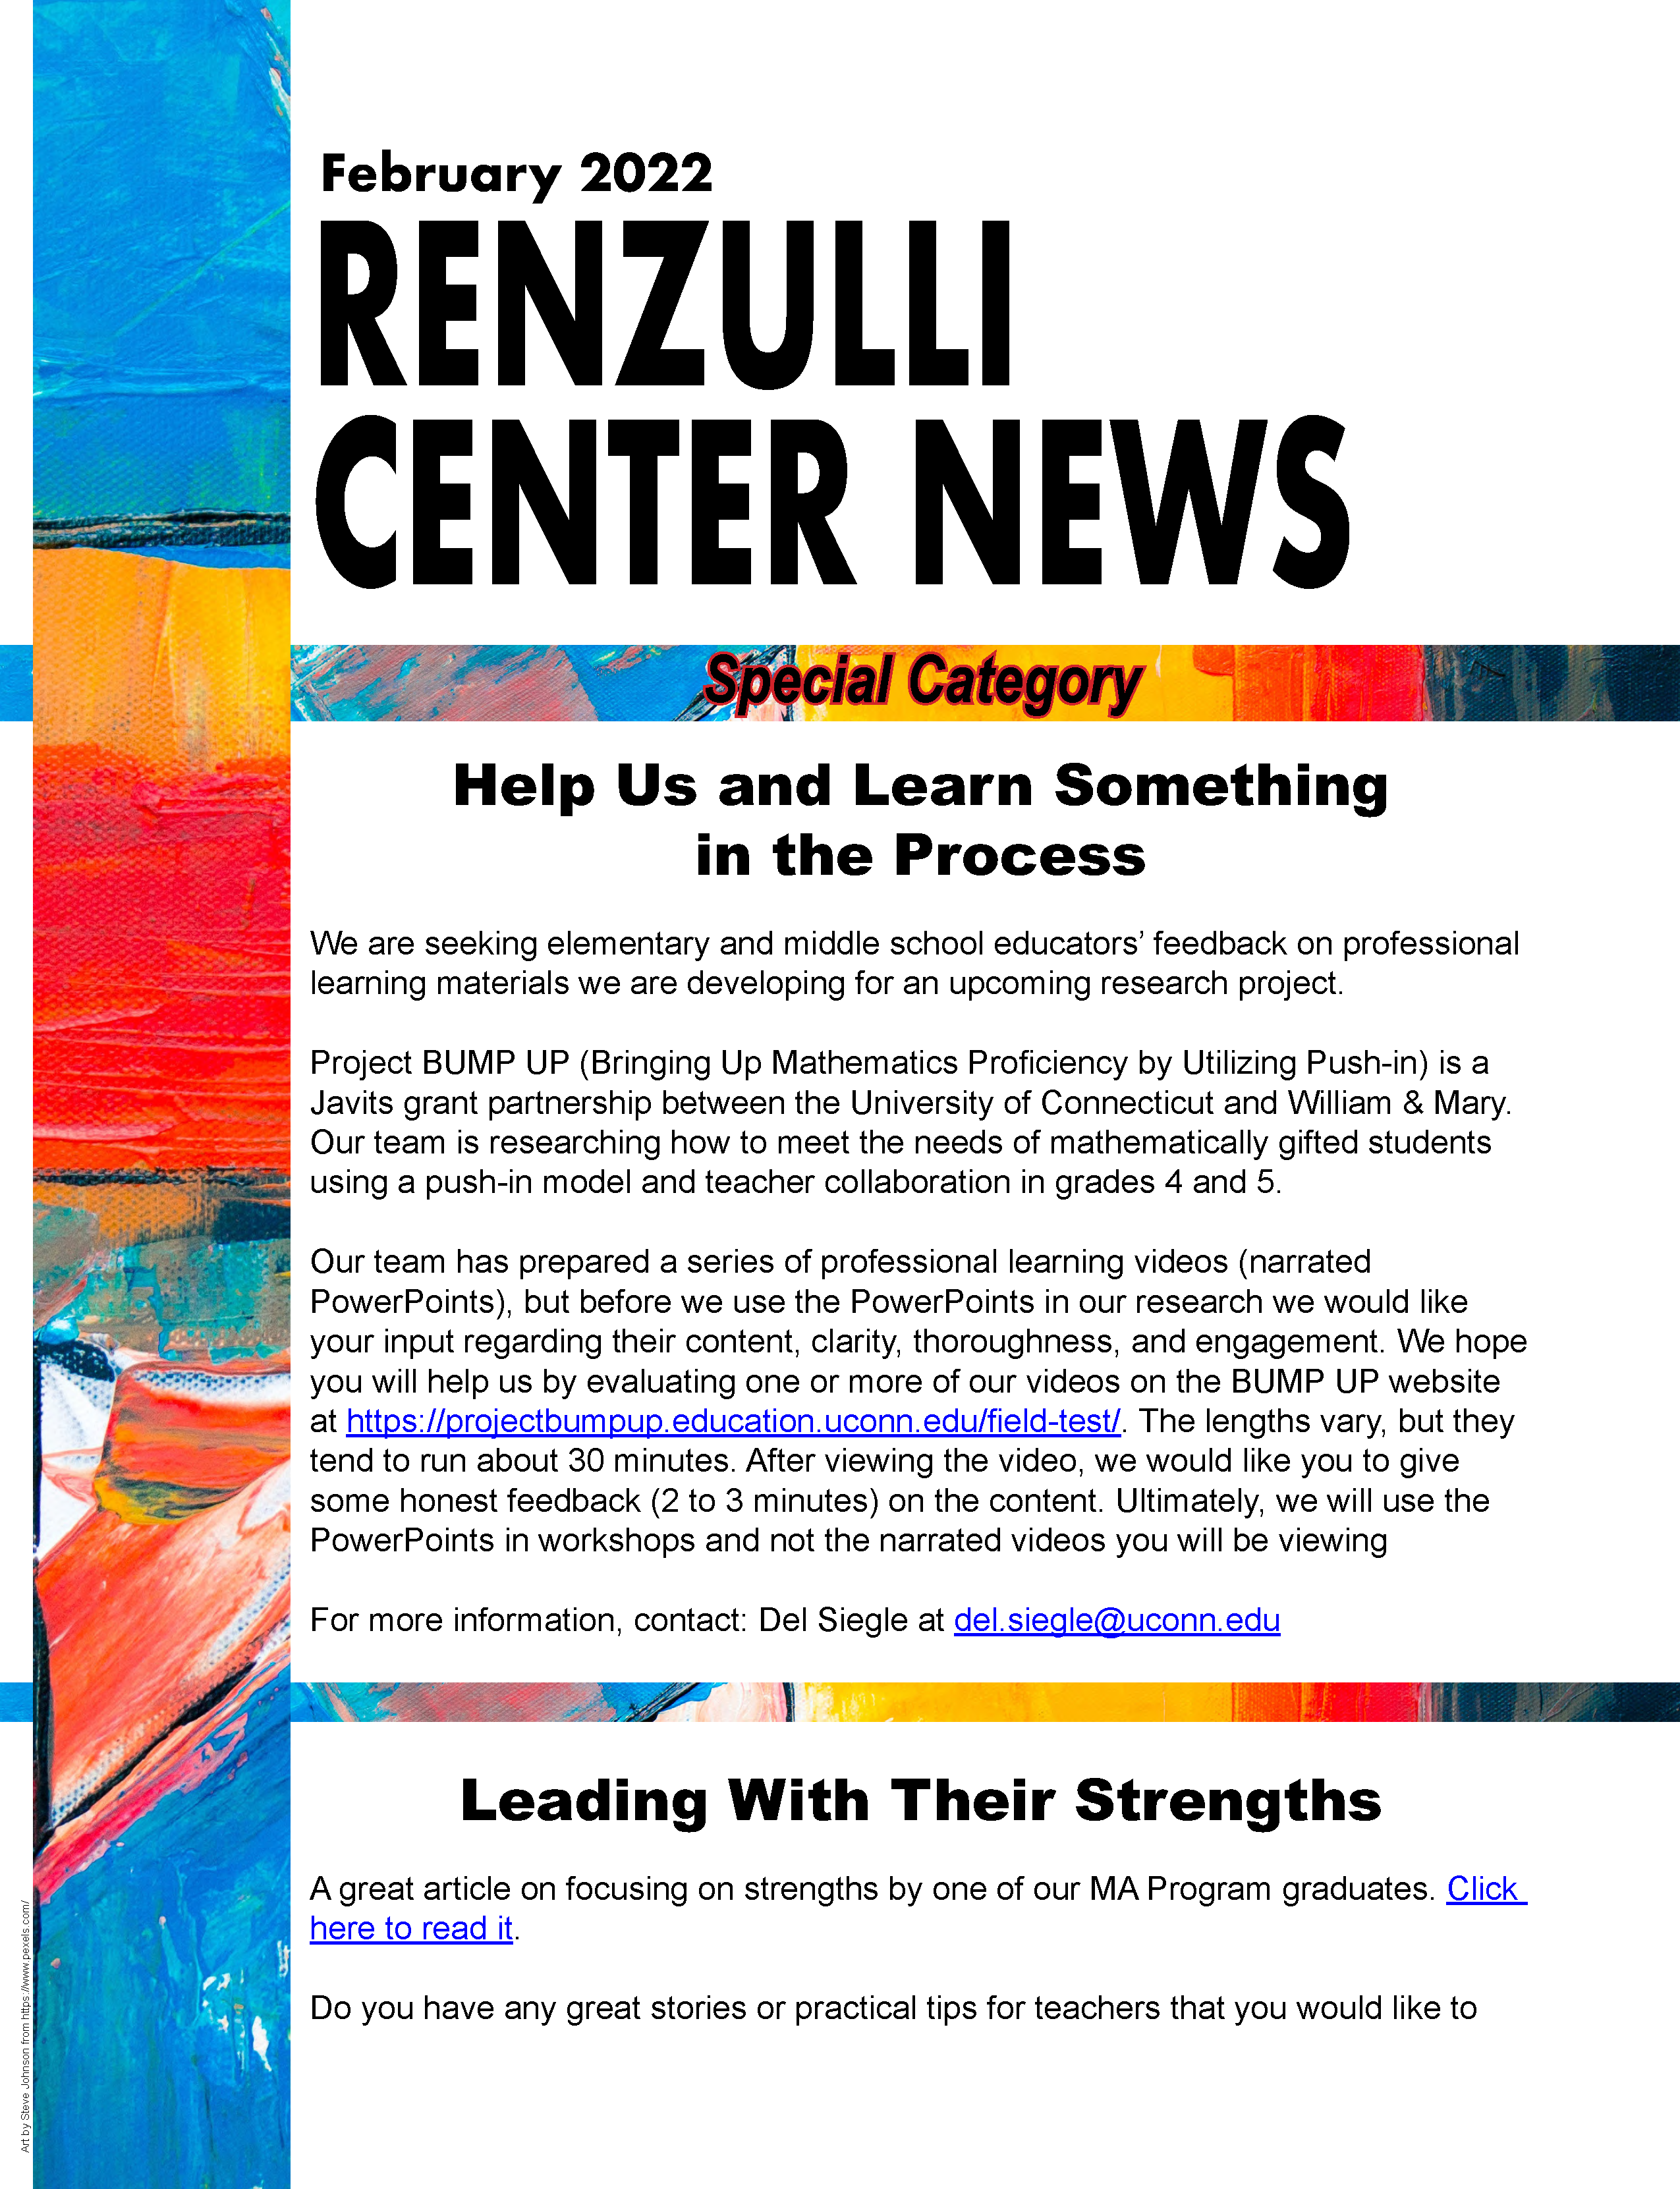 February 2022 Renzulli News Cover Graphic